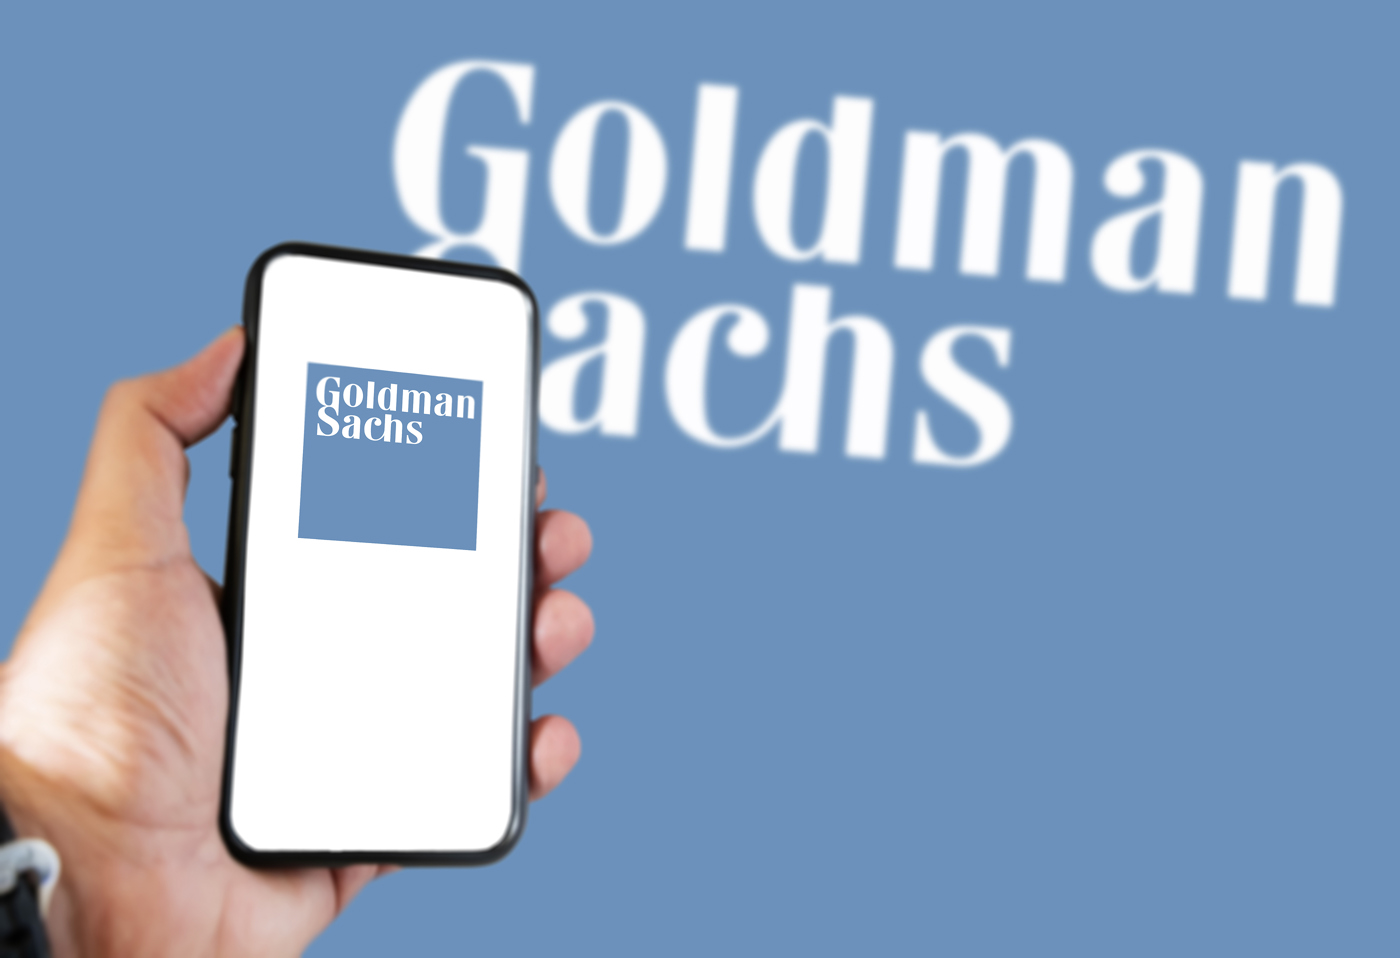 Goldman Sachs stock, Goldman stock, GS stock